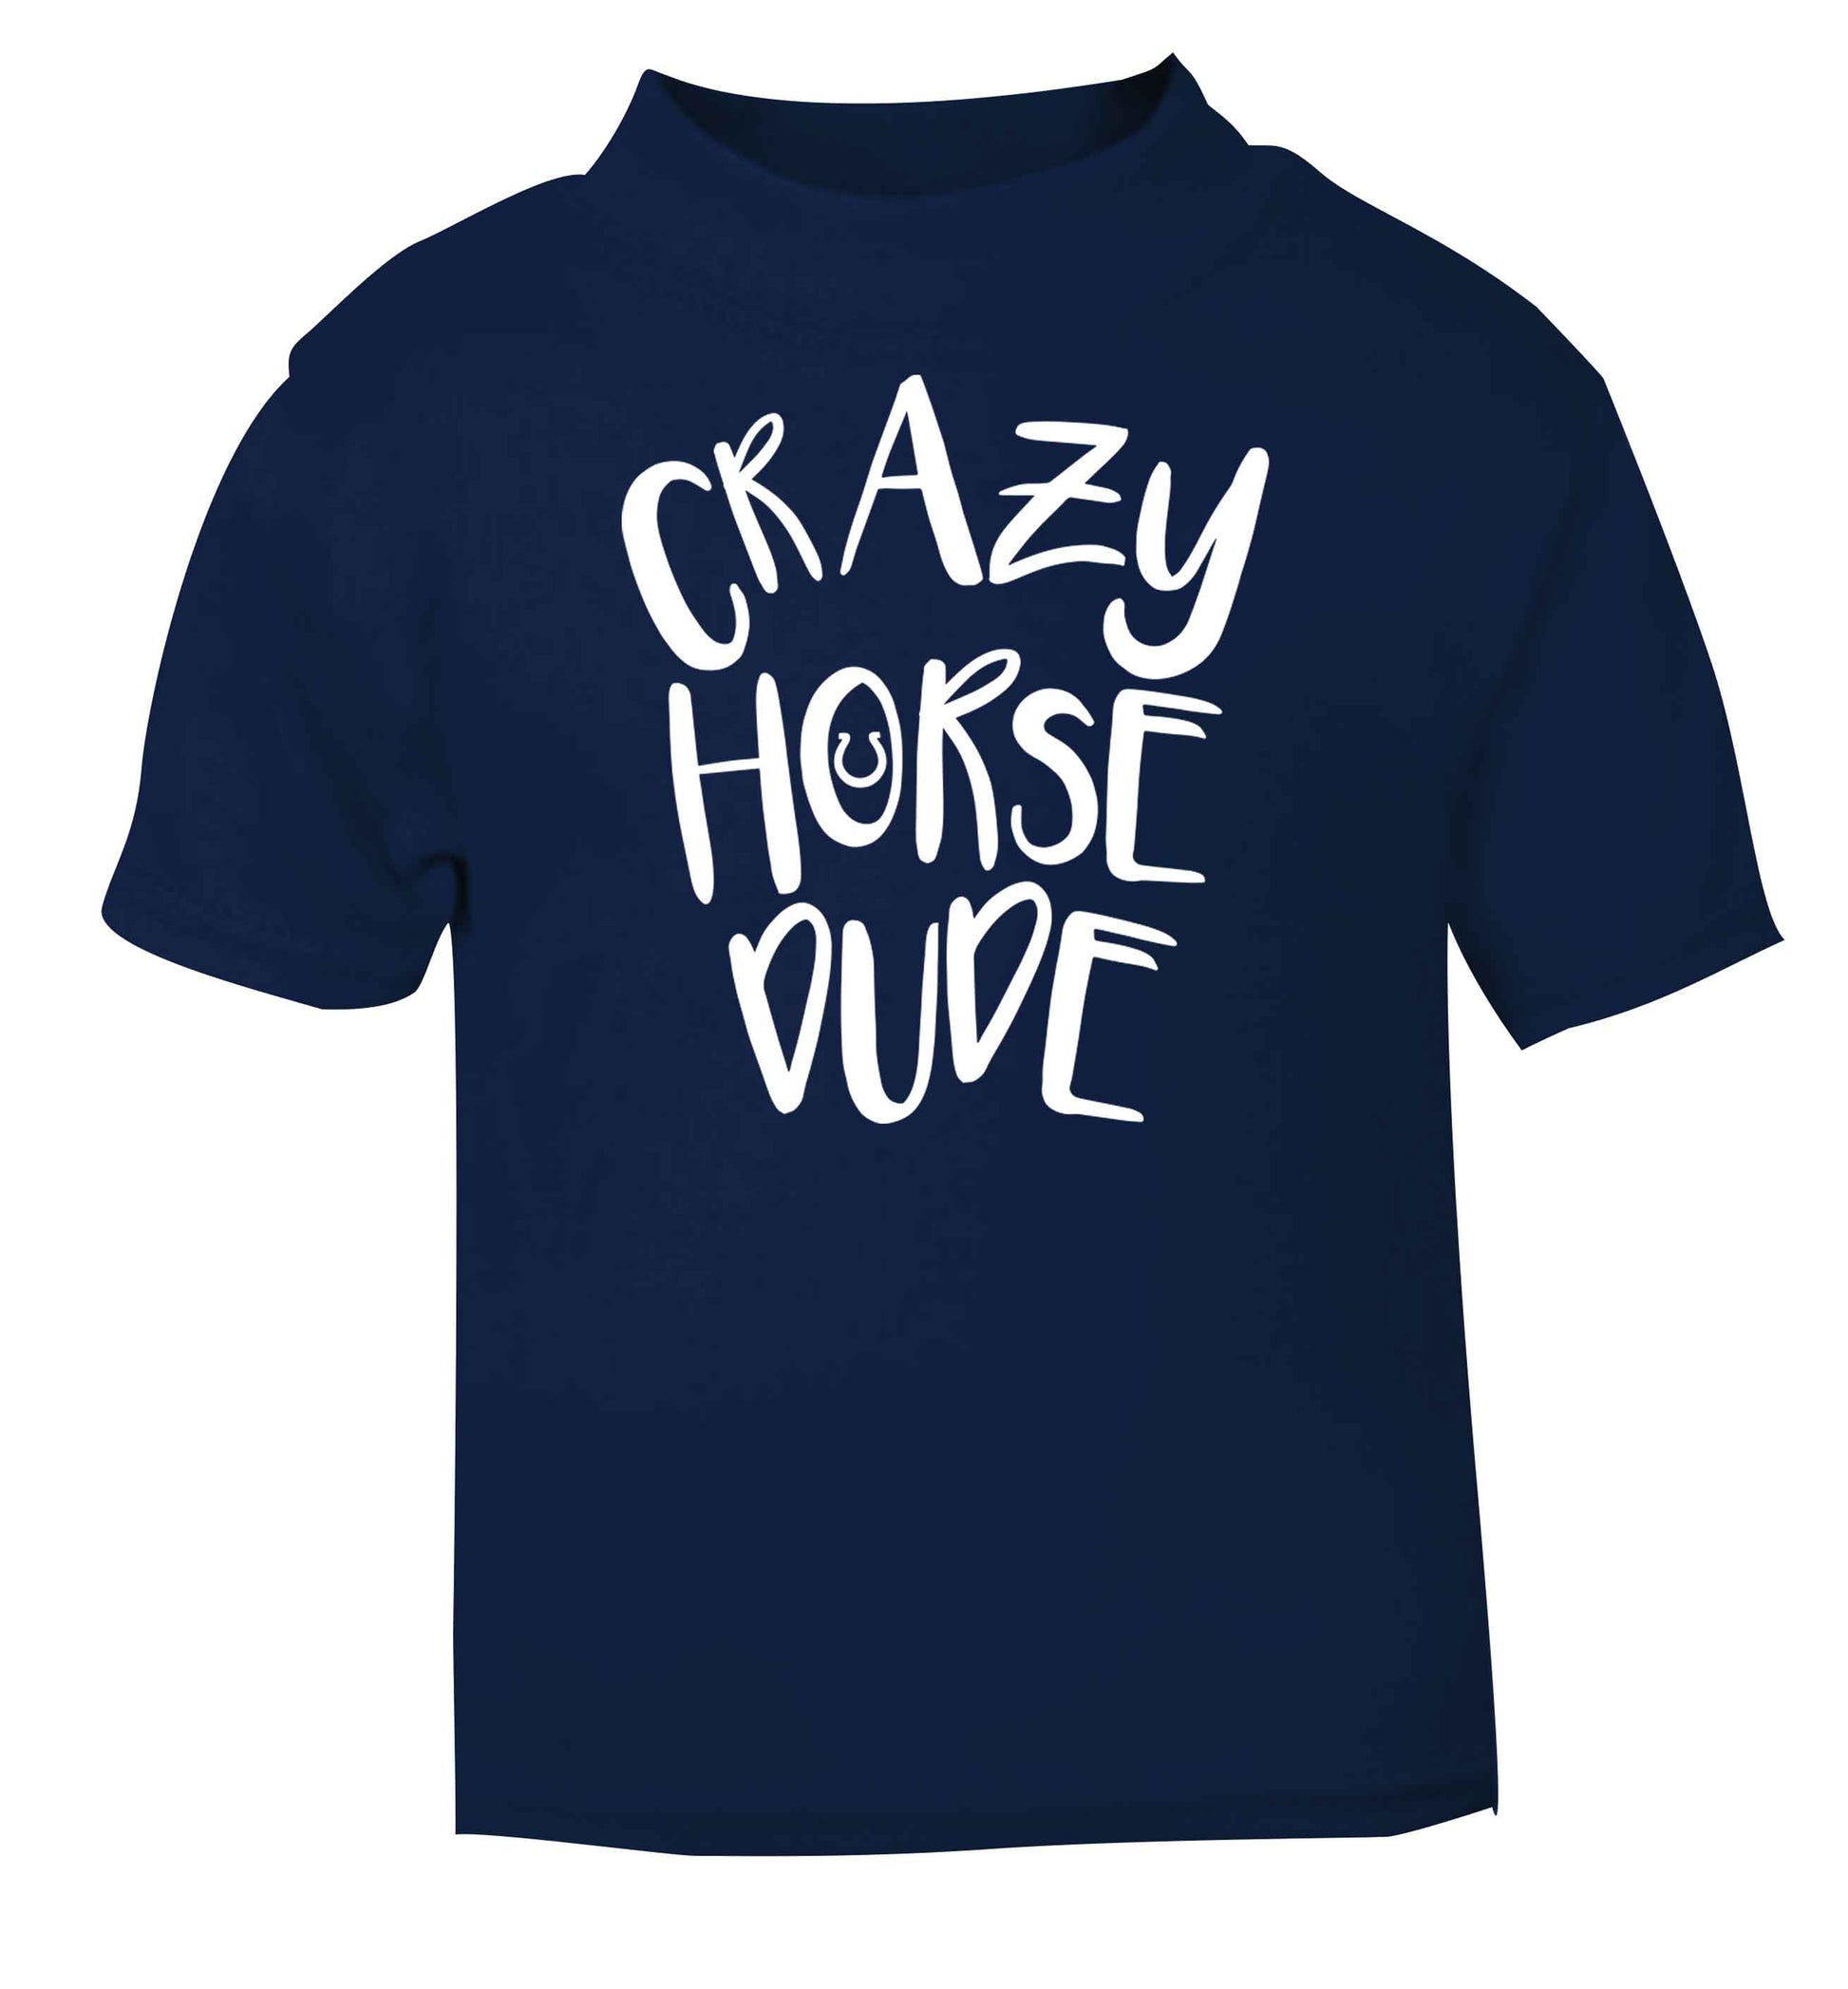 Crazy horse dude navy baby toddler Tshirt 2 Years